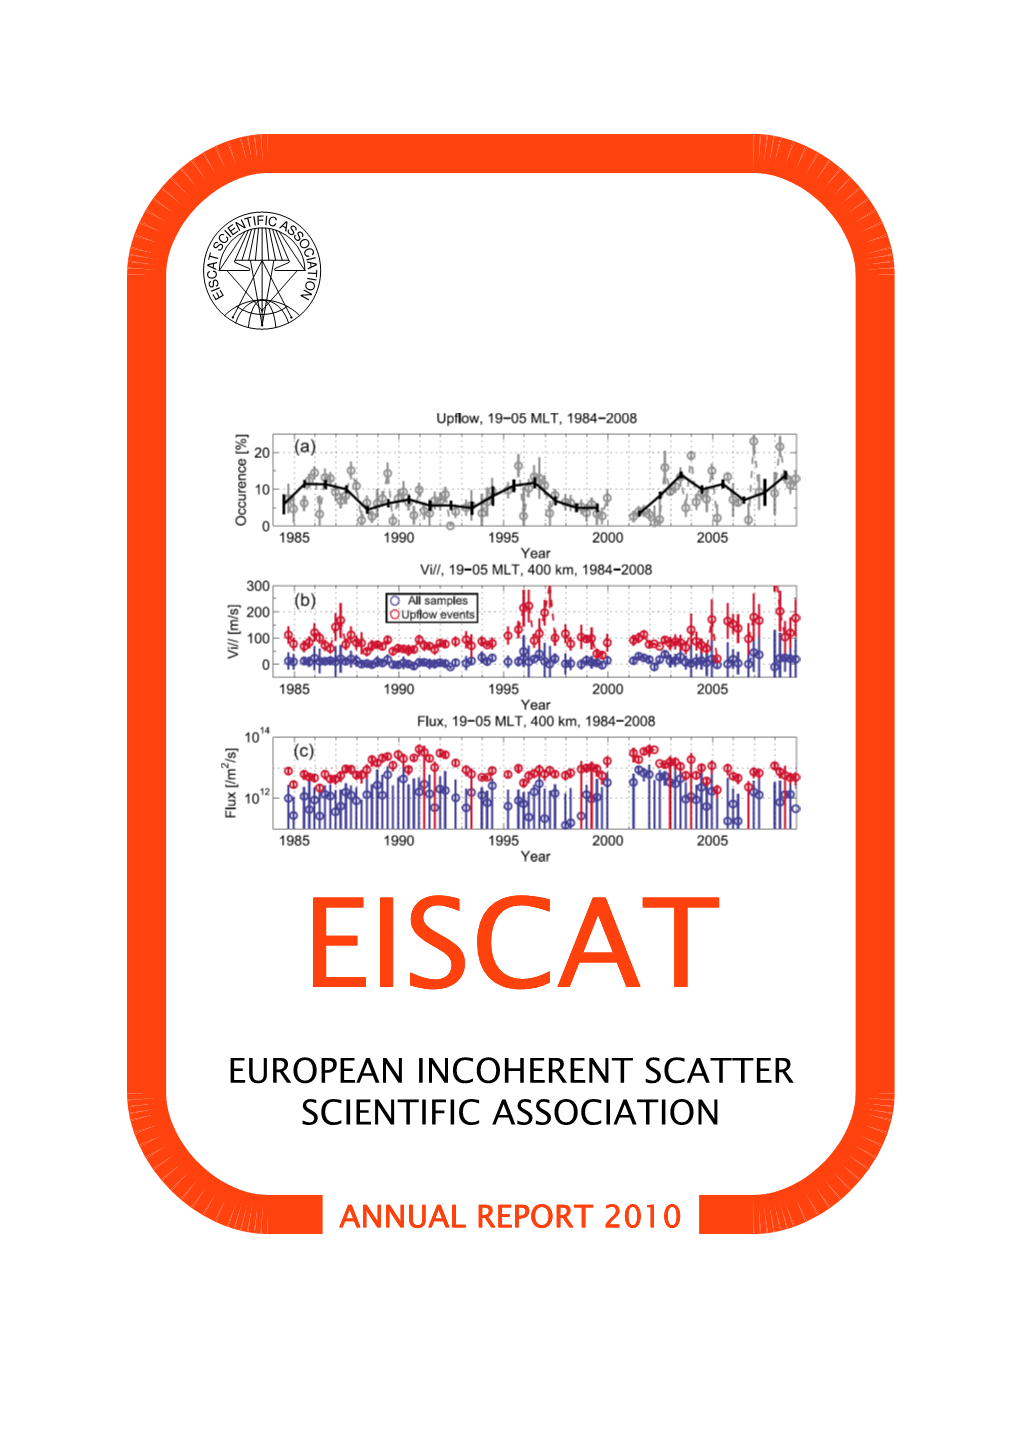 European Incoherent Scatter Scientific Association